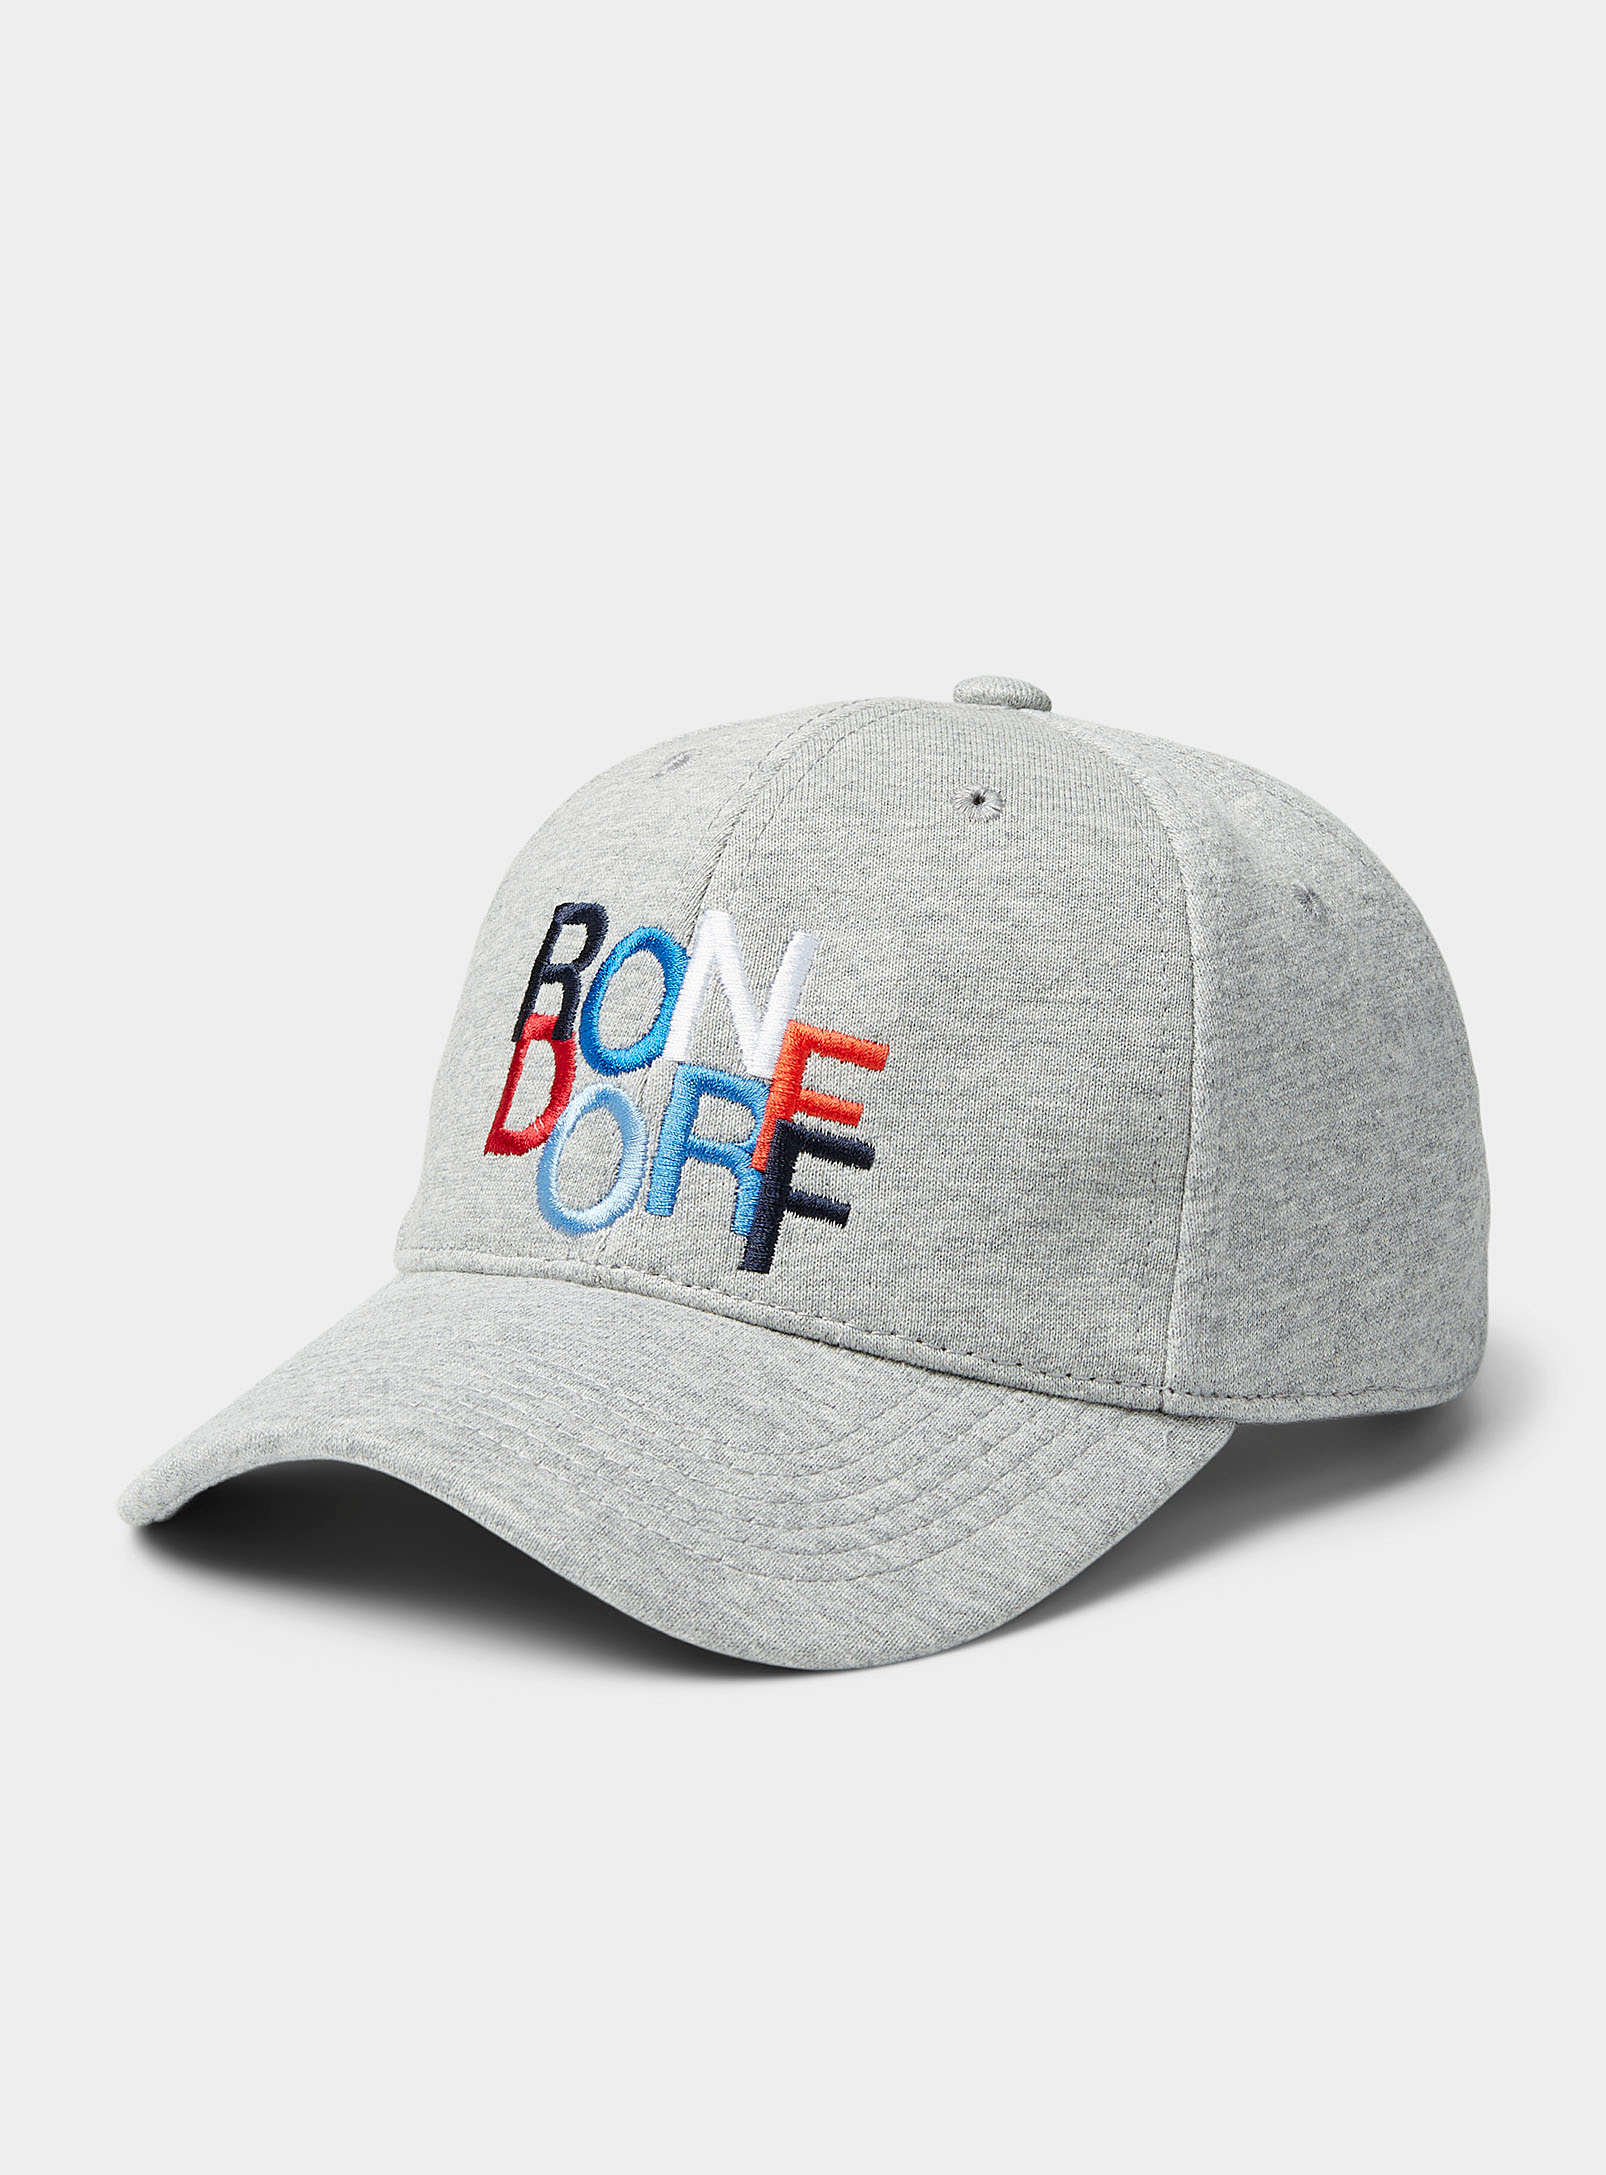 Ron Dorff - Men's Embroidered signature jersey cap